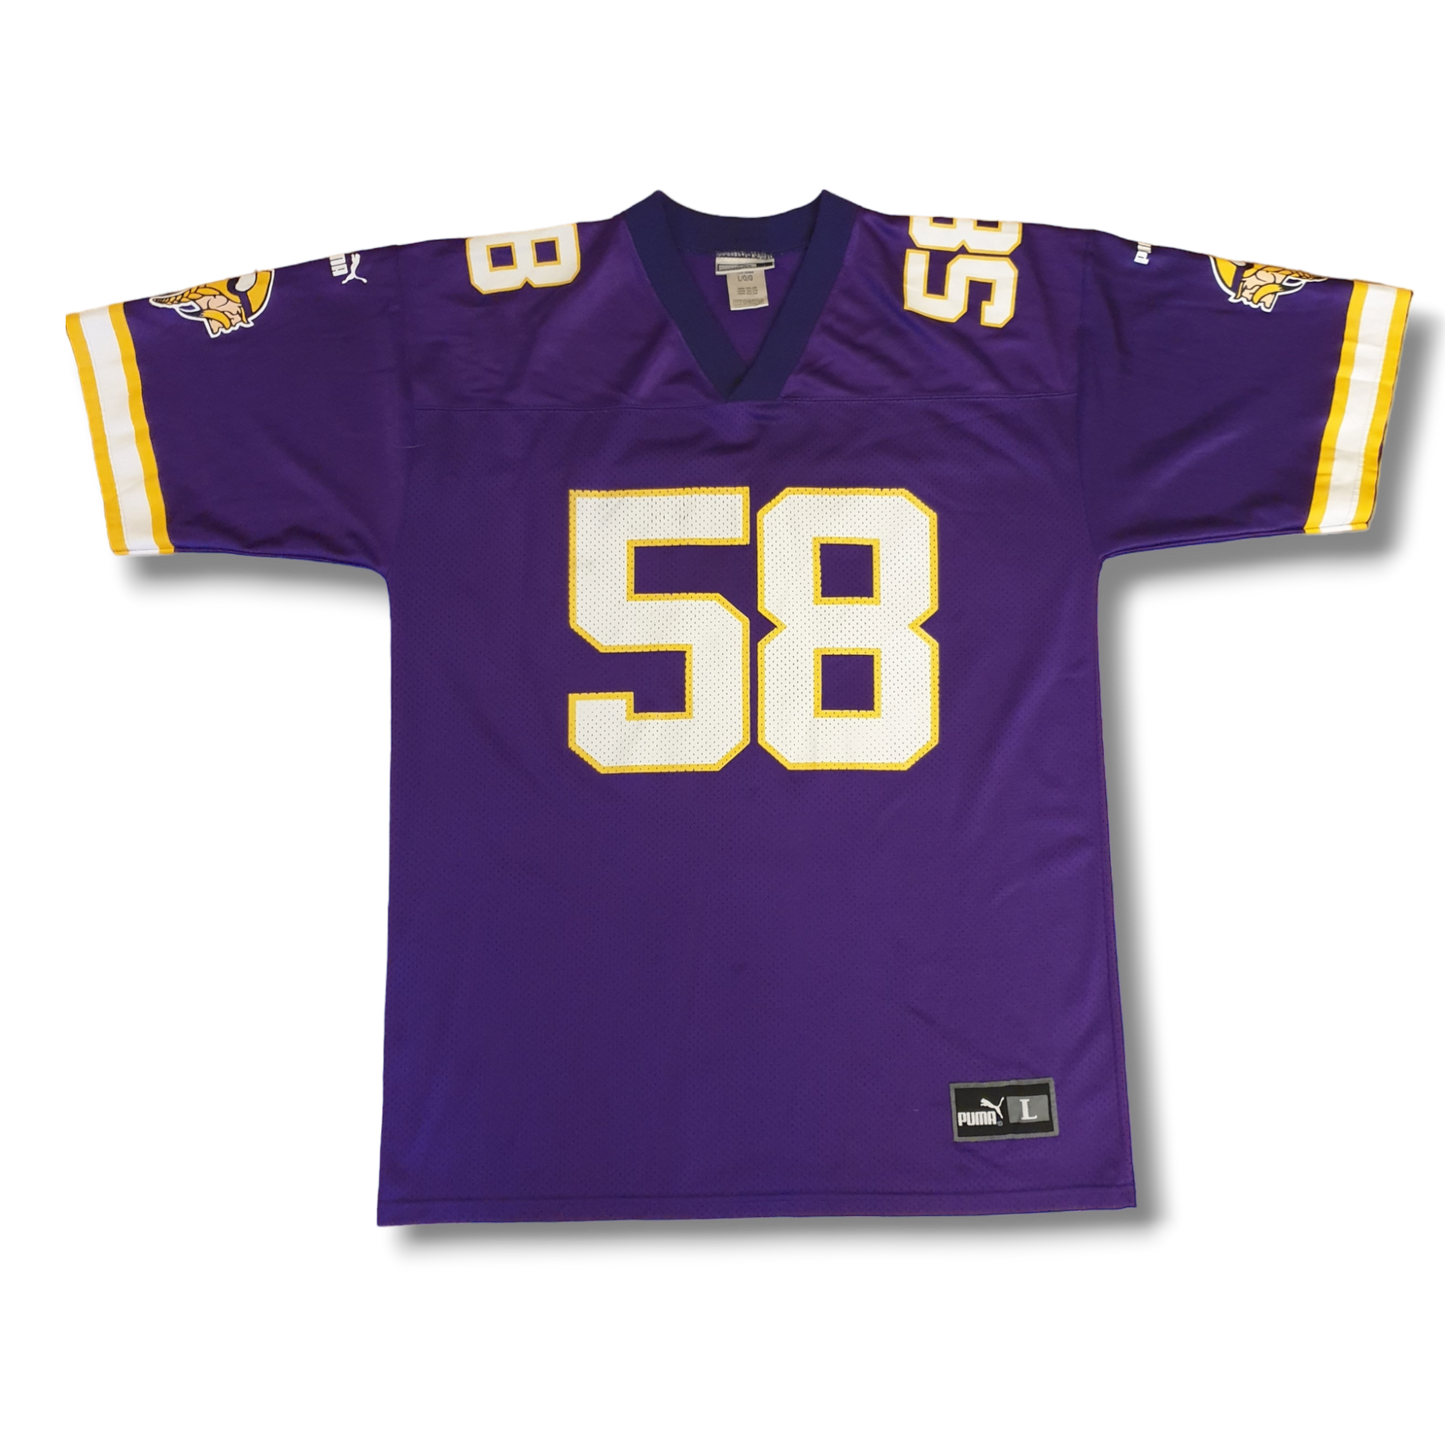 NFL Vikings Mesh Jersey 🏈
E.McDaniel 58 L-XL